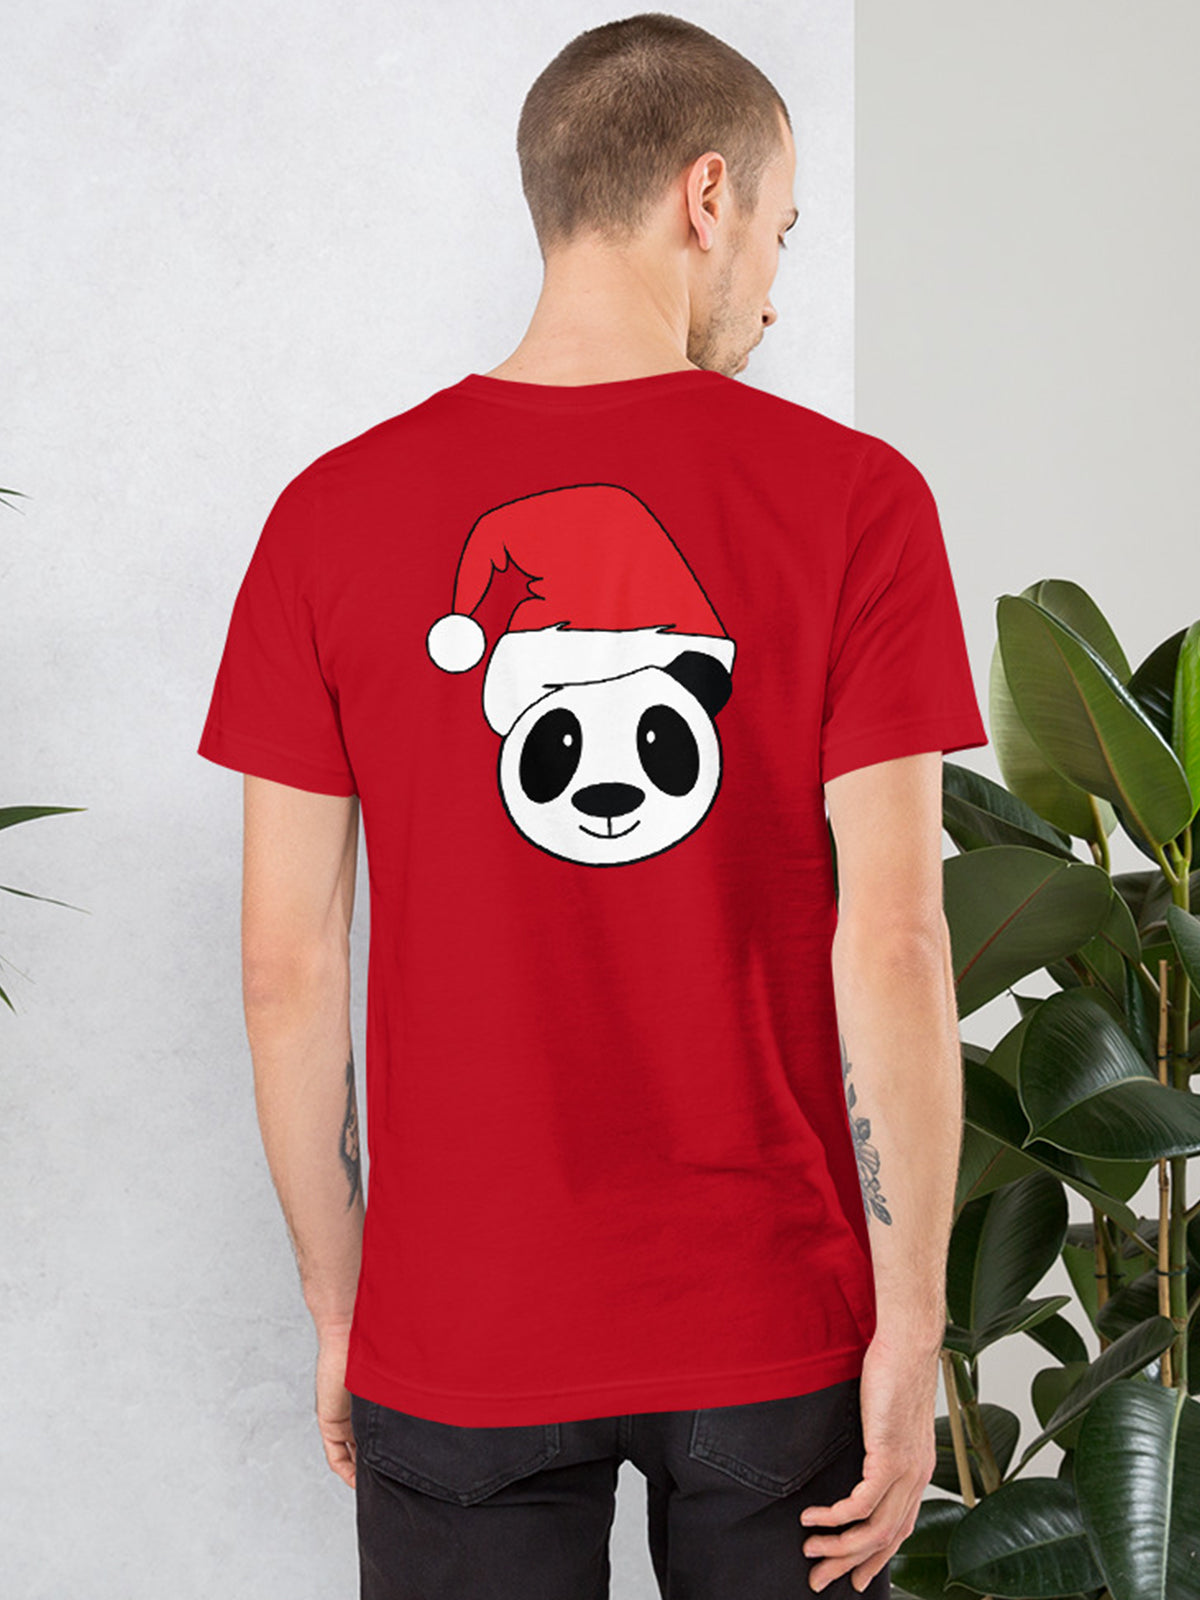 Christmas Special Edition Logo - Premium T-shirt